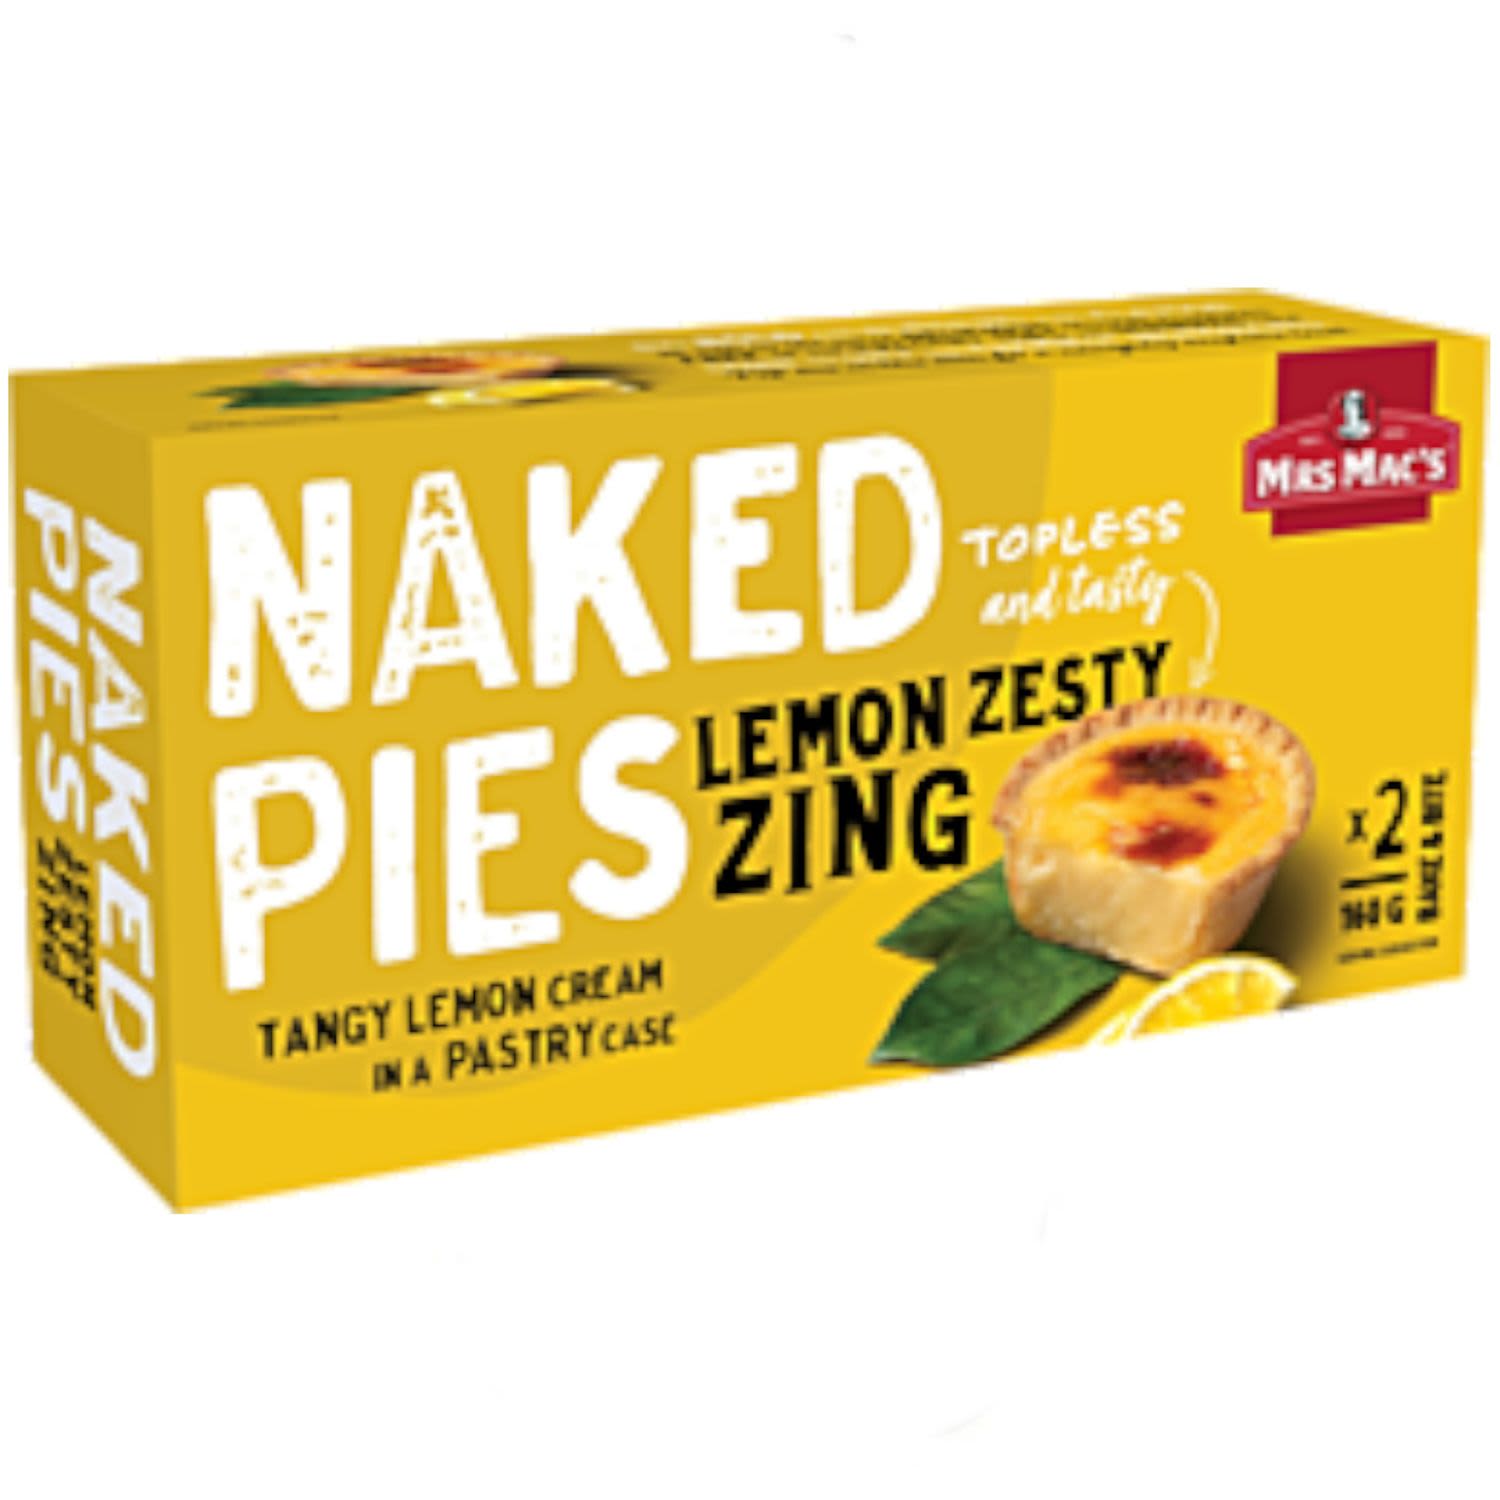 Mrs Mac's Naked Pies Lemon Zesty Zing, 2 Each